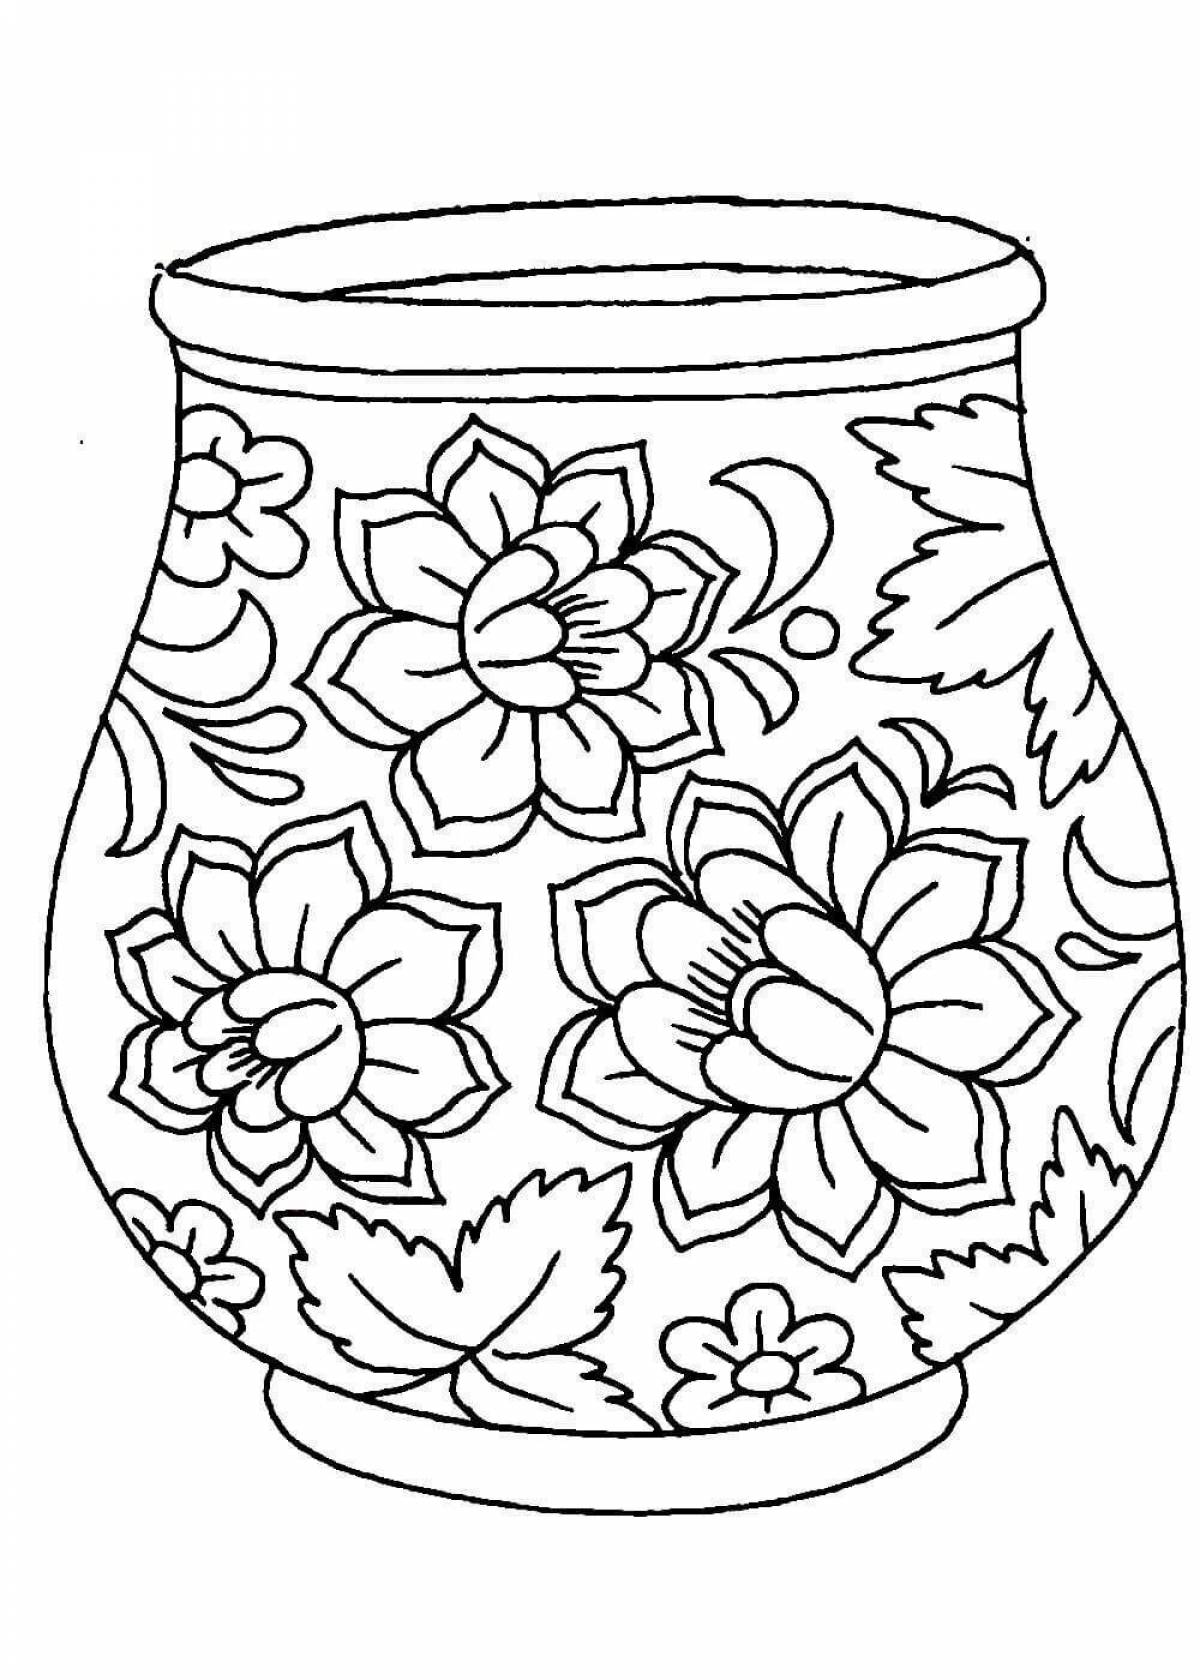 Detailed Khokhloma simple coloring